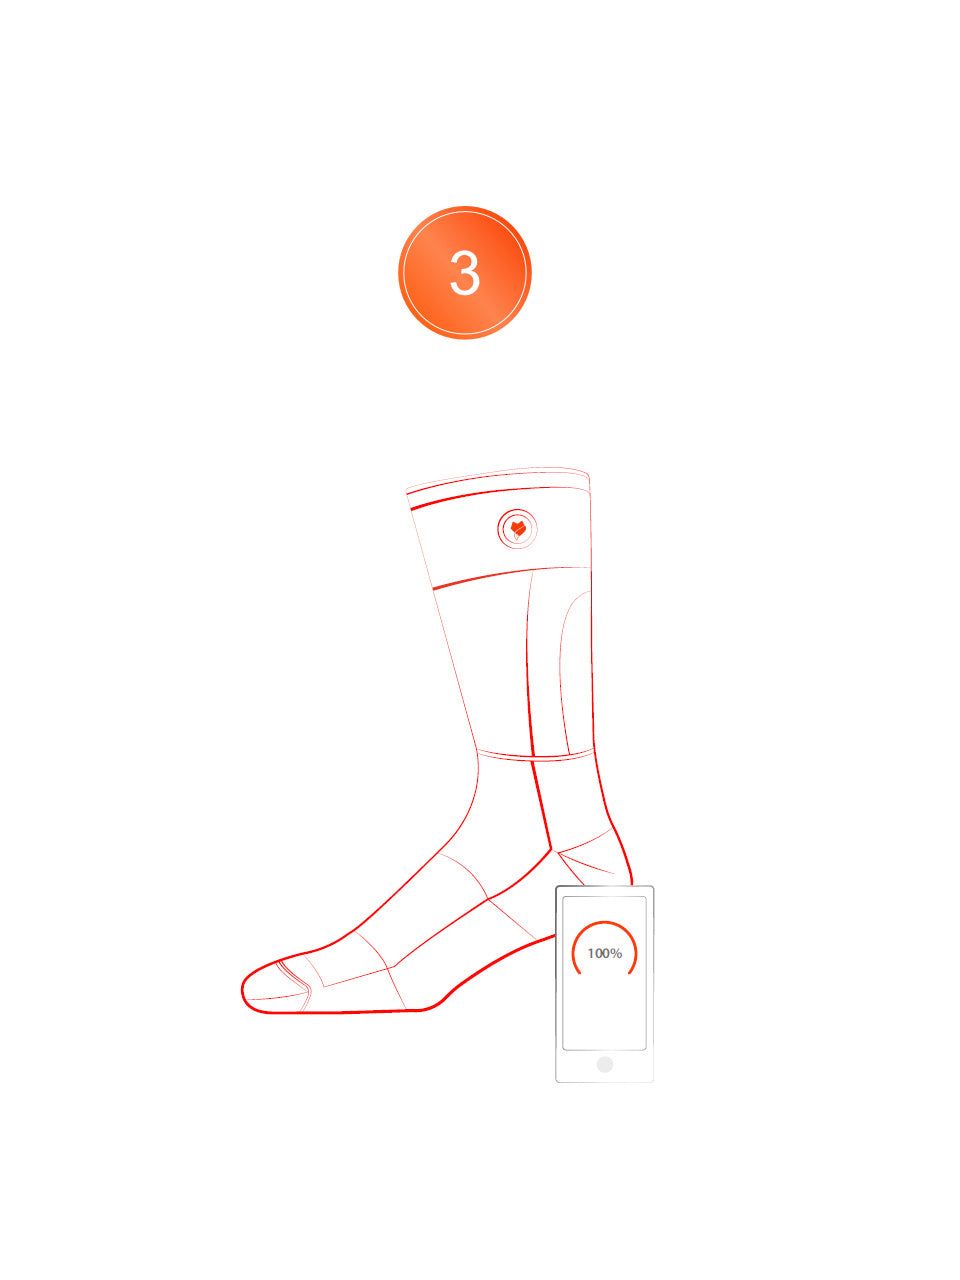 Vulpés HeatSock - smart heated socks with smart features